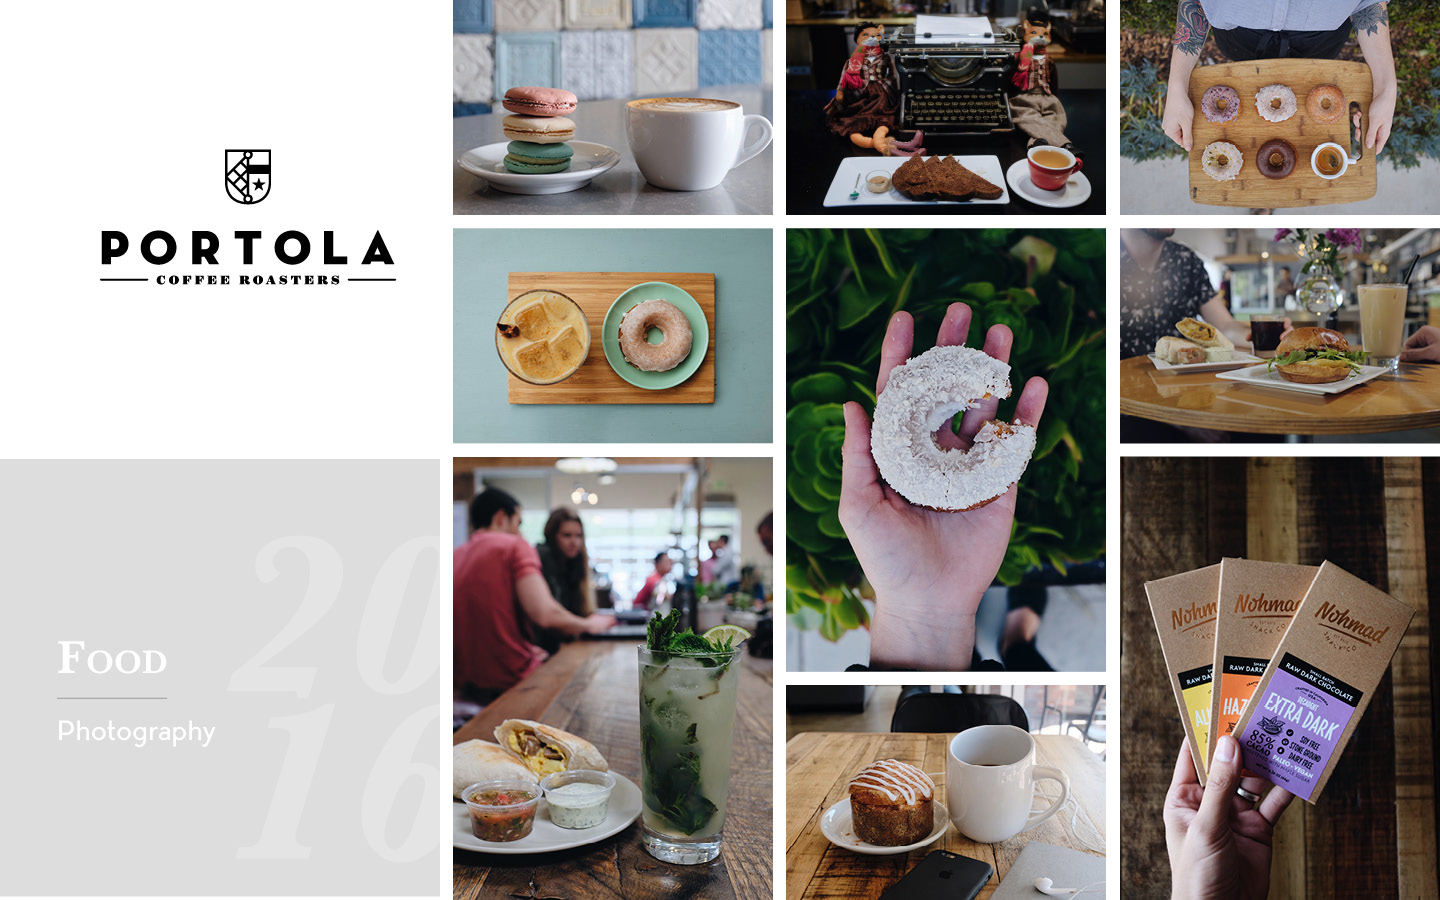 Patrick Hardy Design Social Media Photography - Portola Coffee Roasters Food Photography